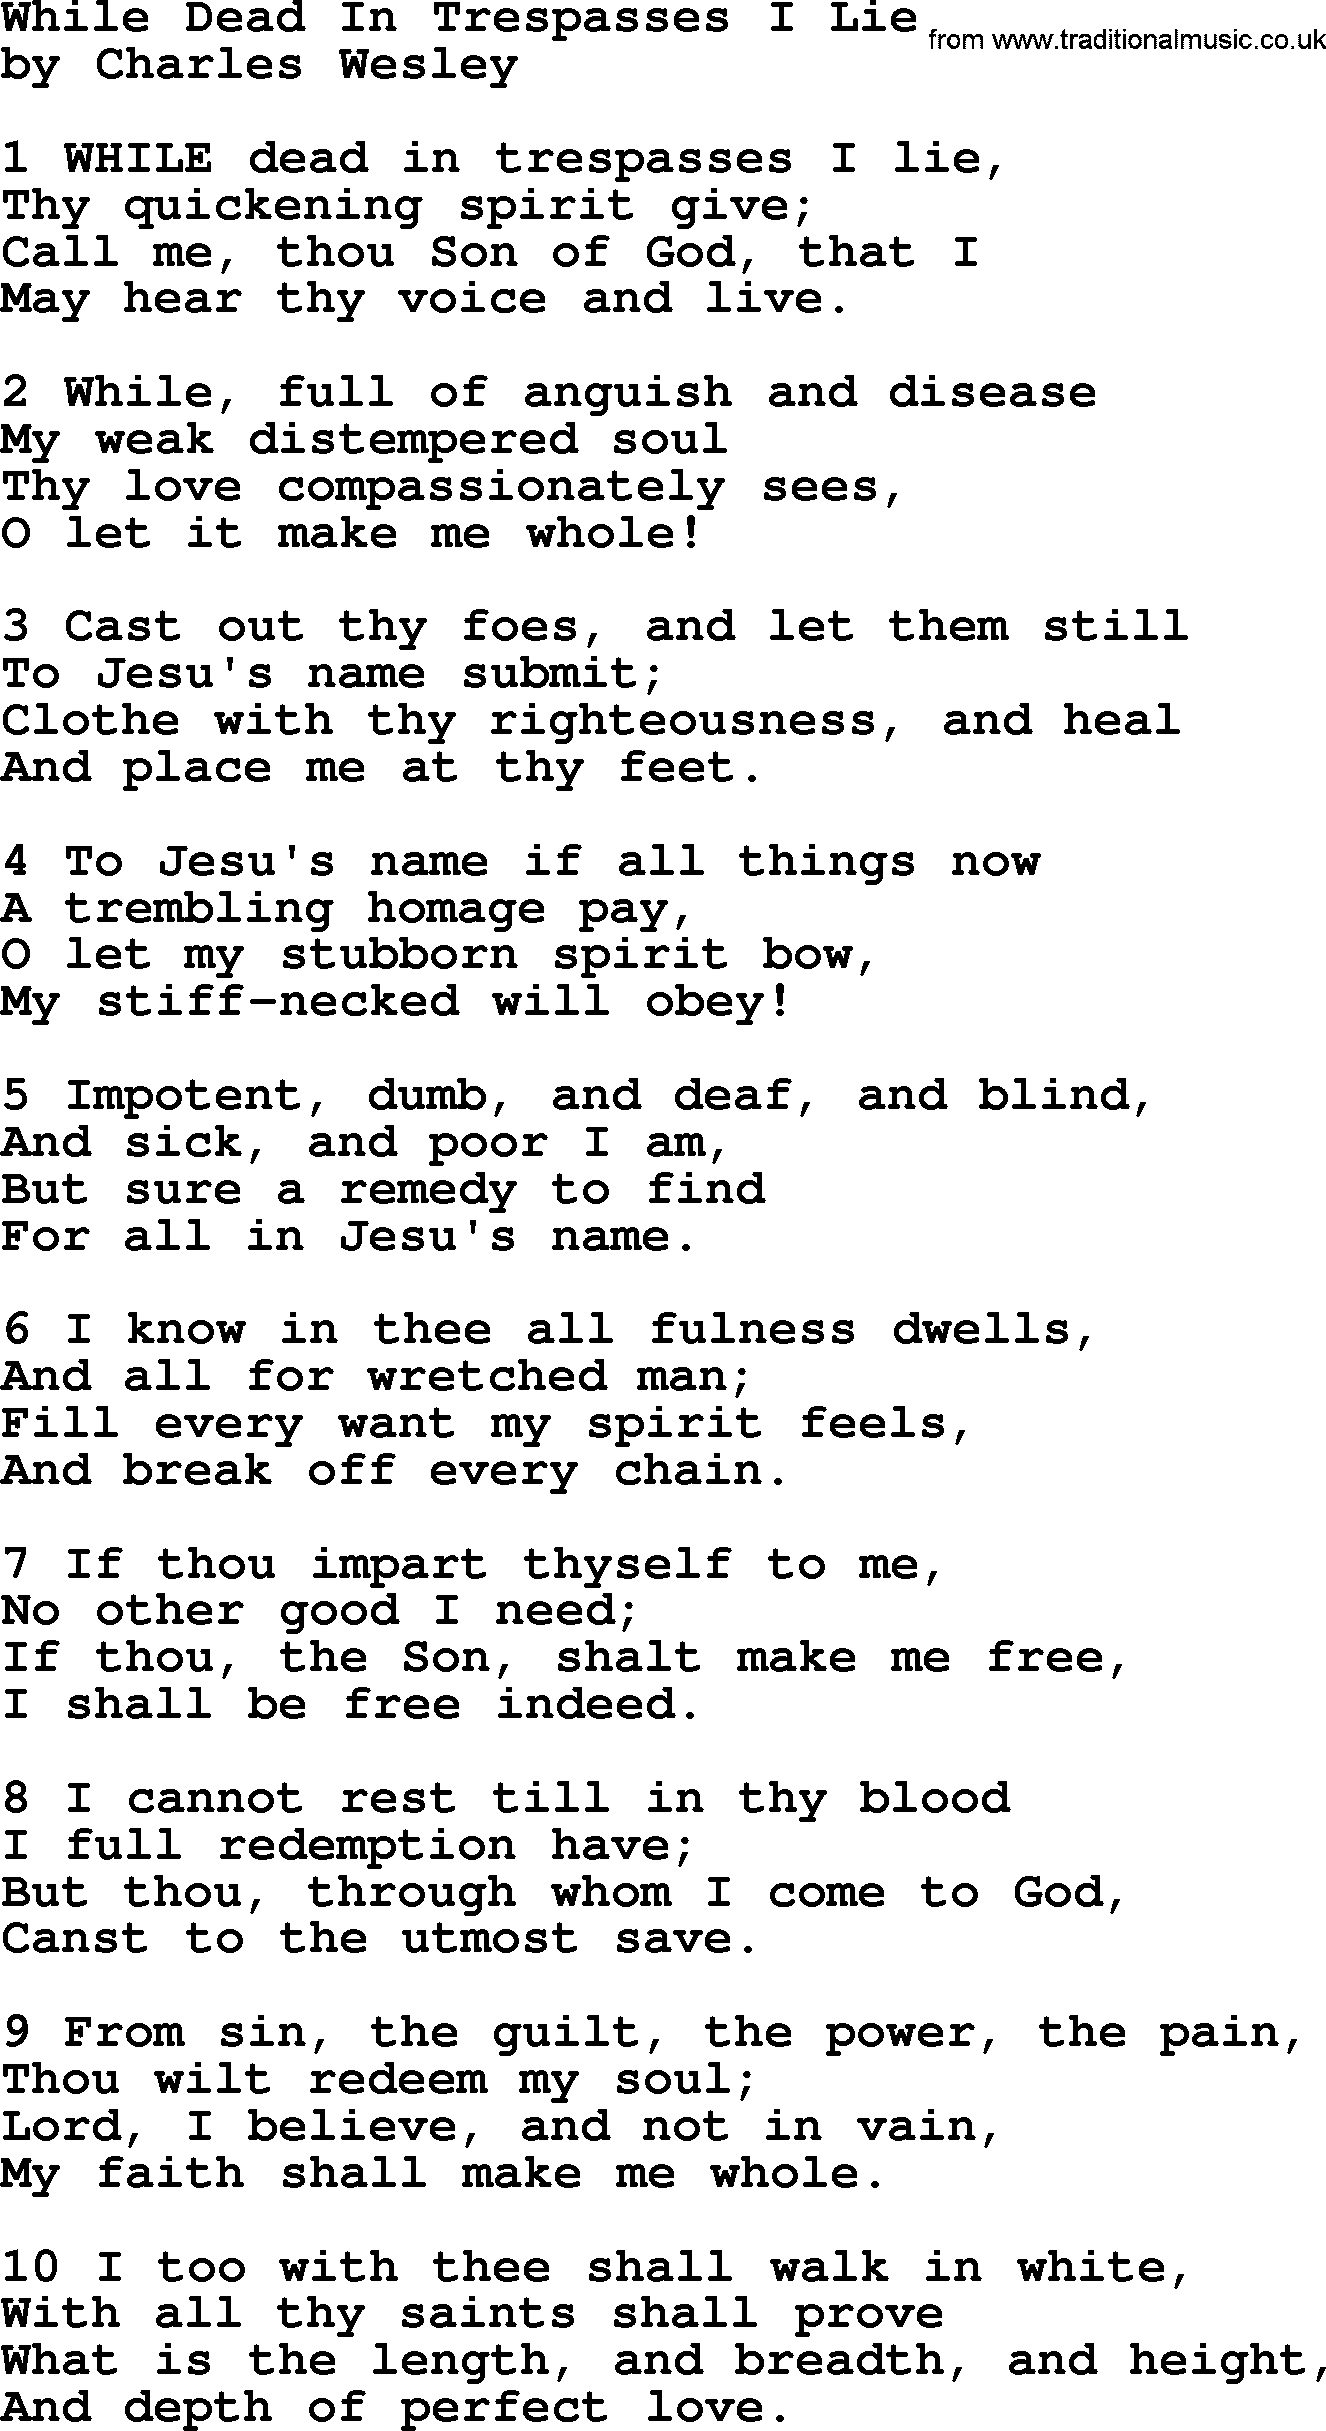 Charles Wesley hymn: While Dead In Trespasses I Lie, lyrics